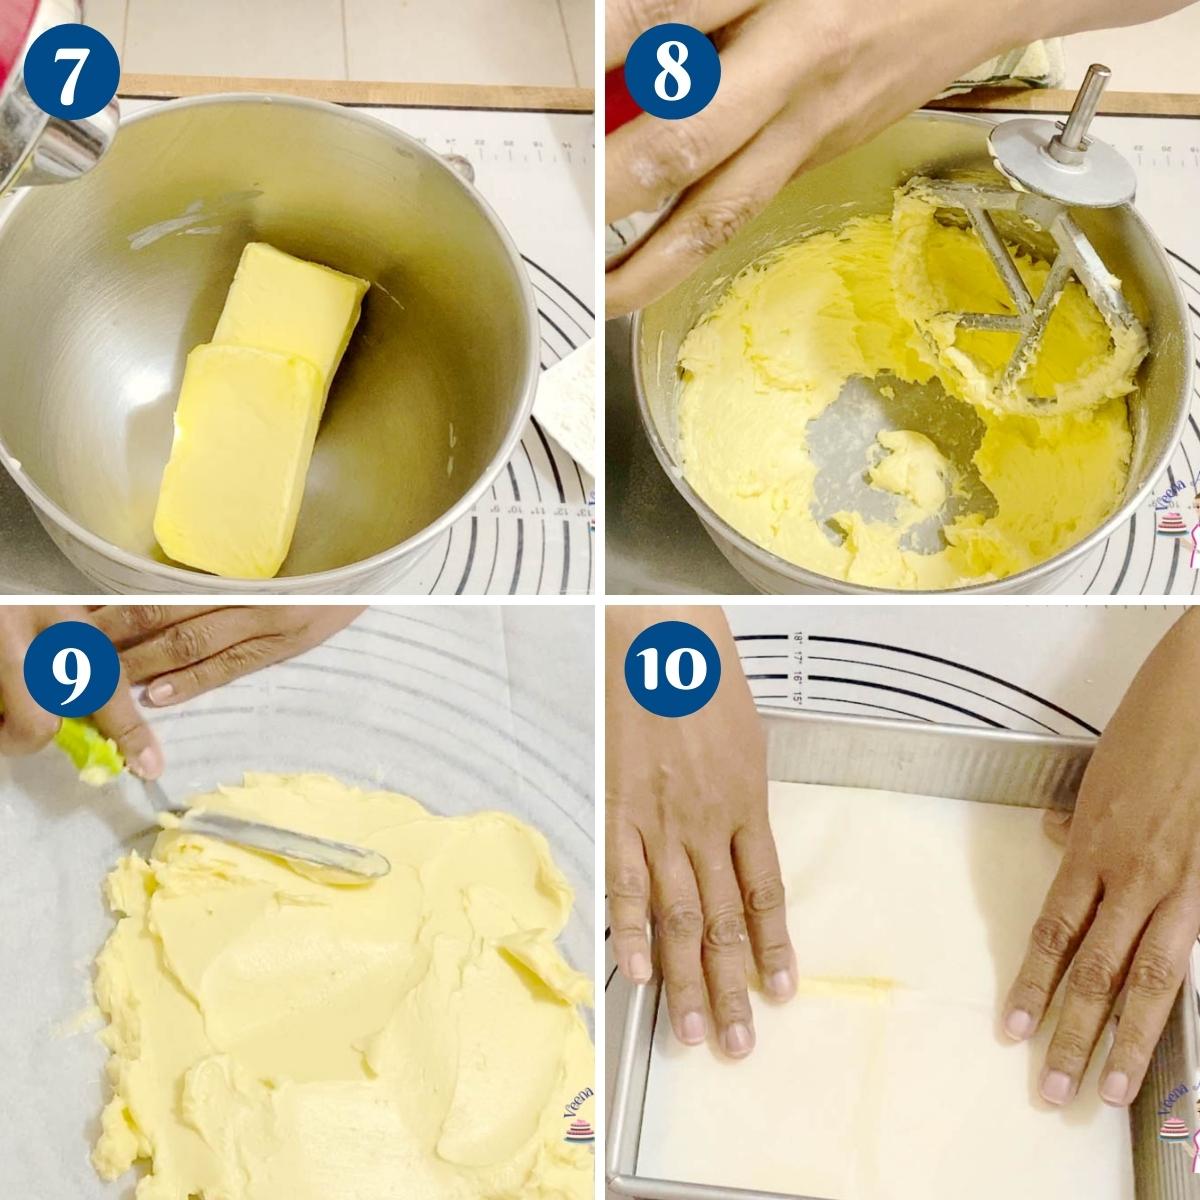 Progress pictures collage preparing butter block for croissants.